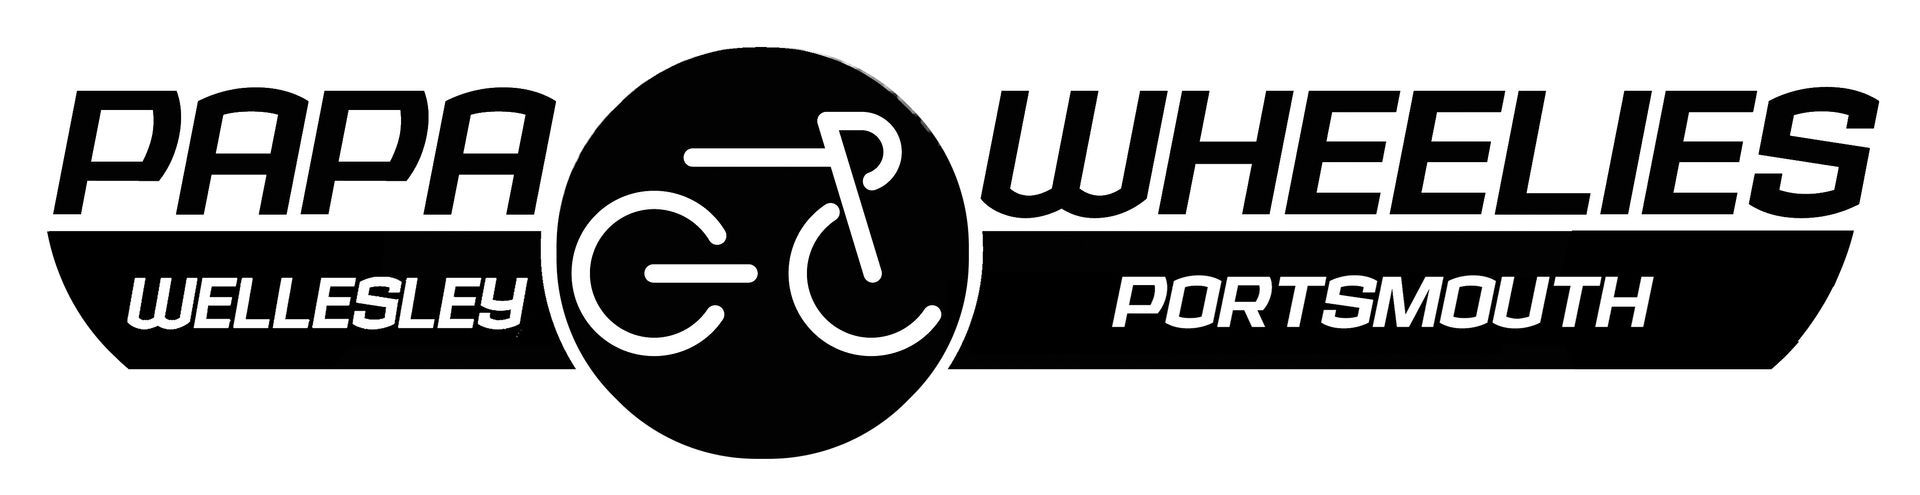 papa-wheelies-logo